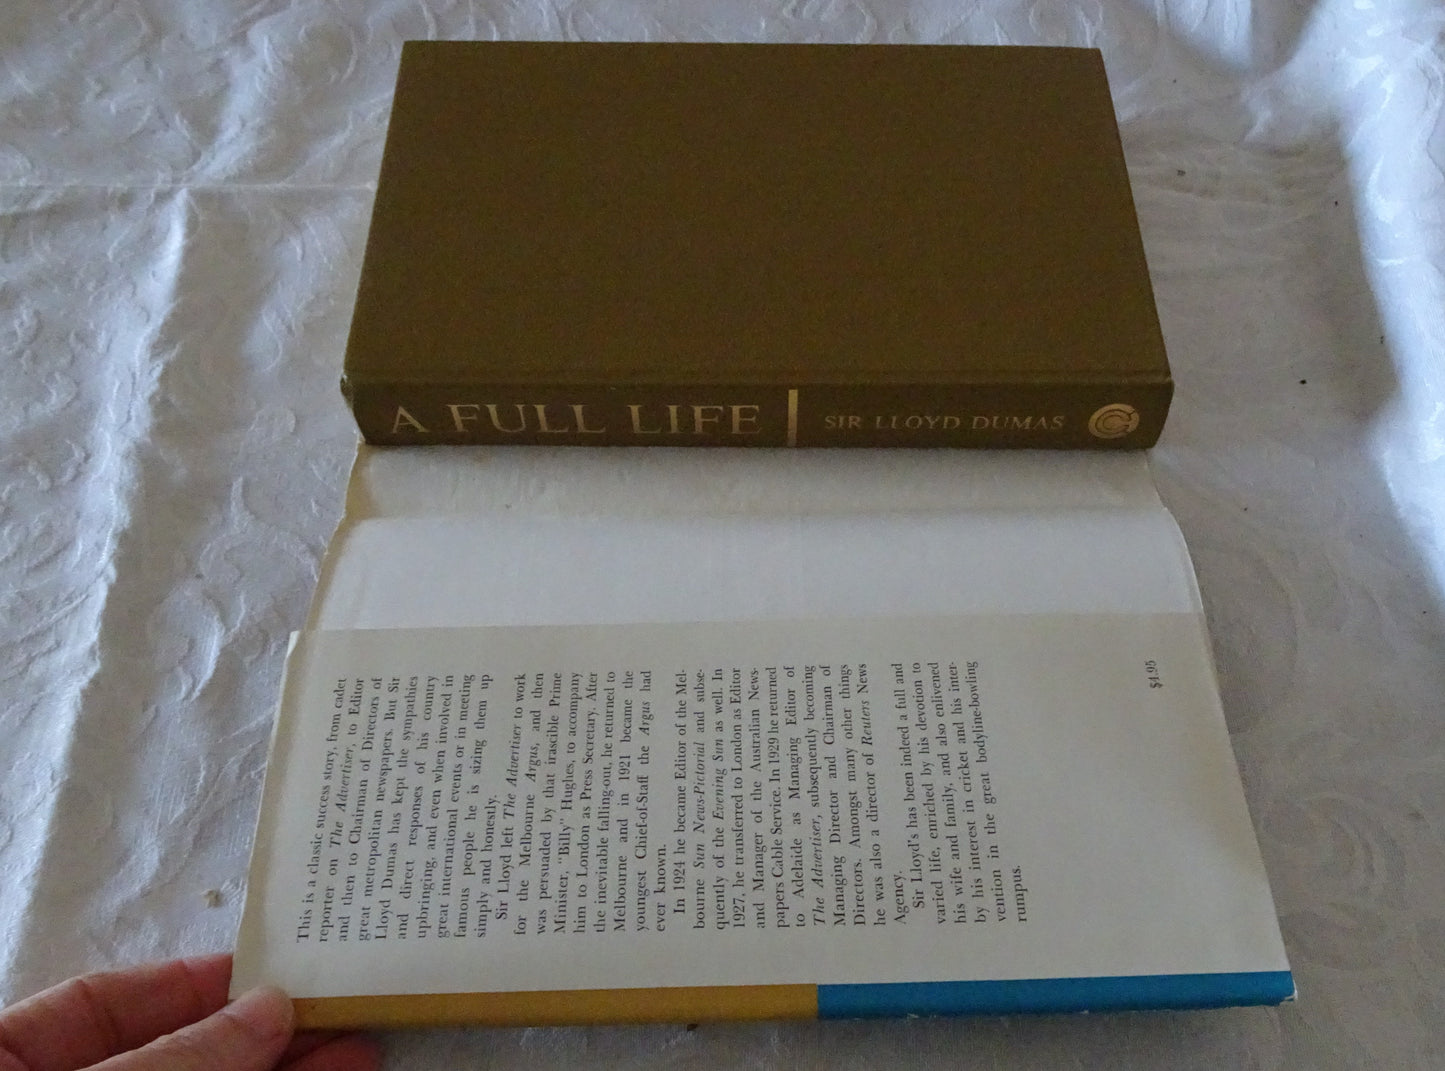 The Story of A Full Life by Sir Lloyd Dumas